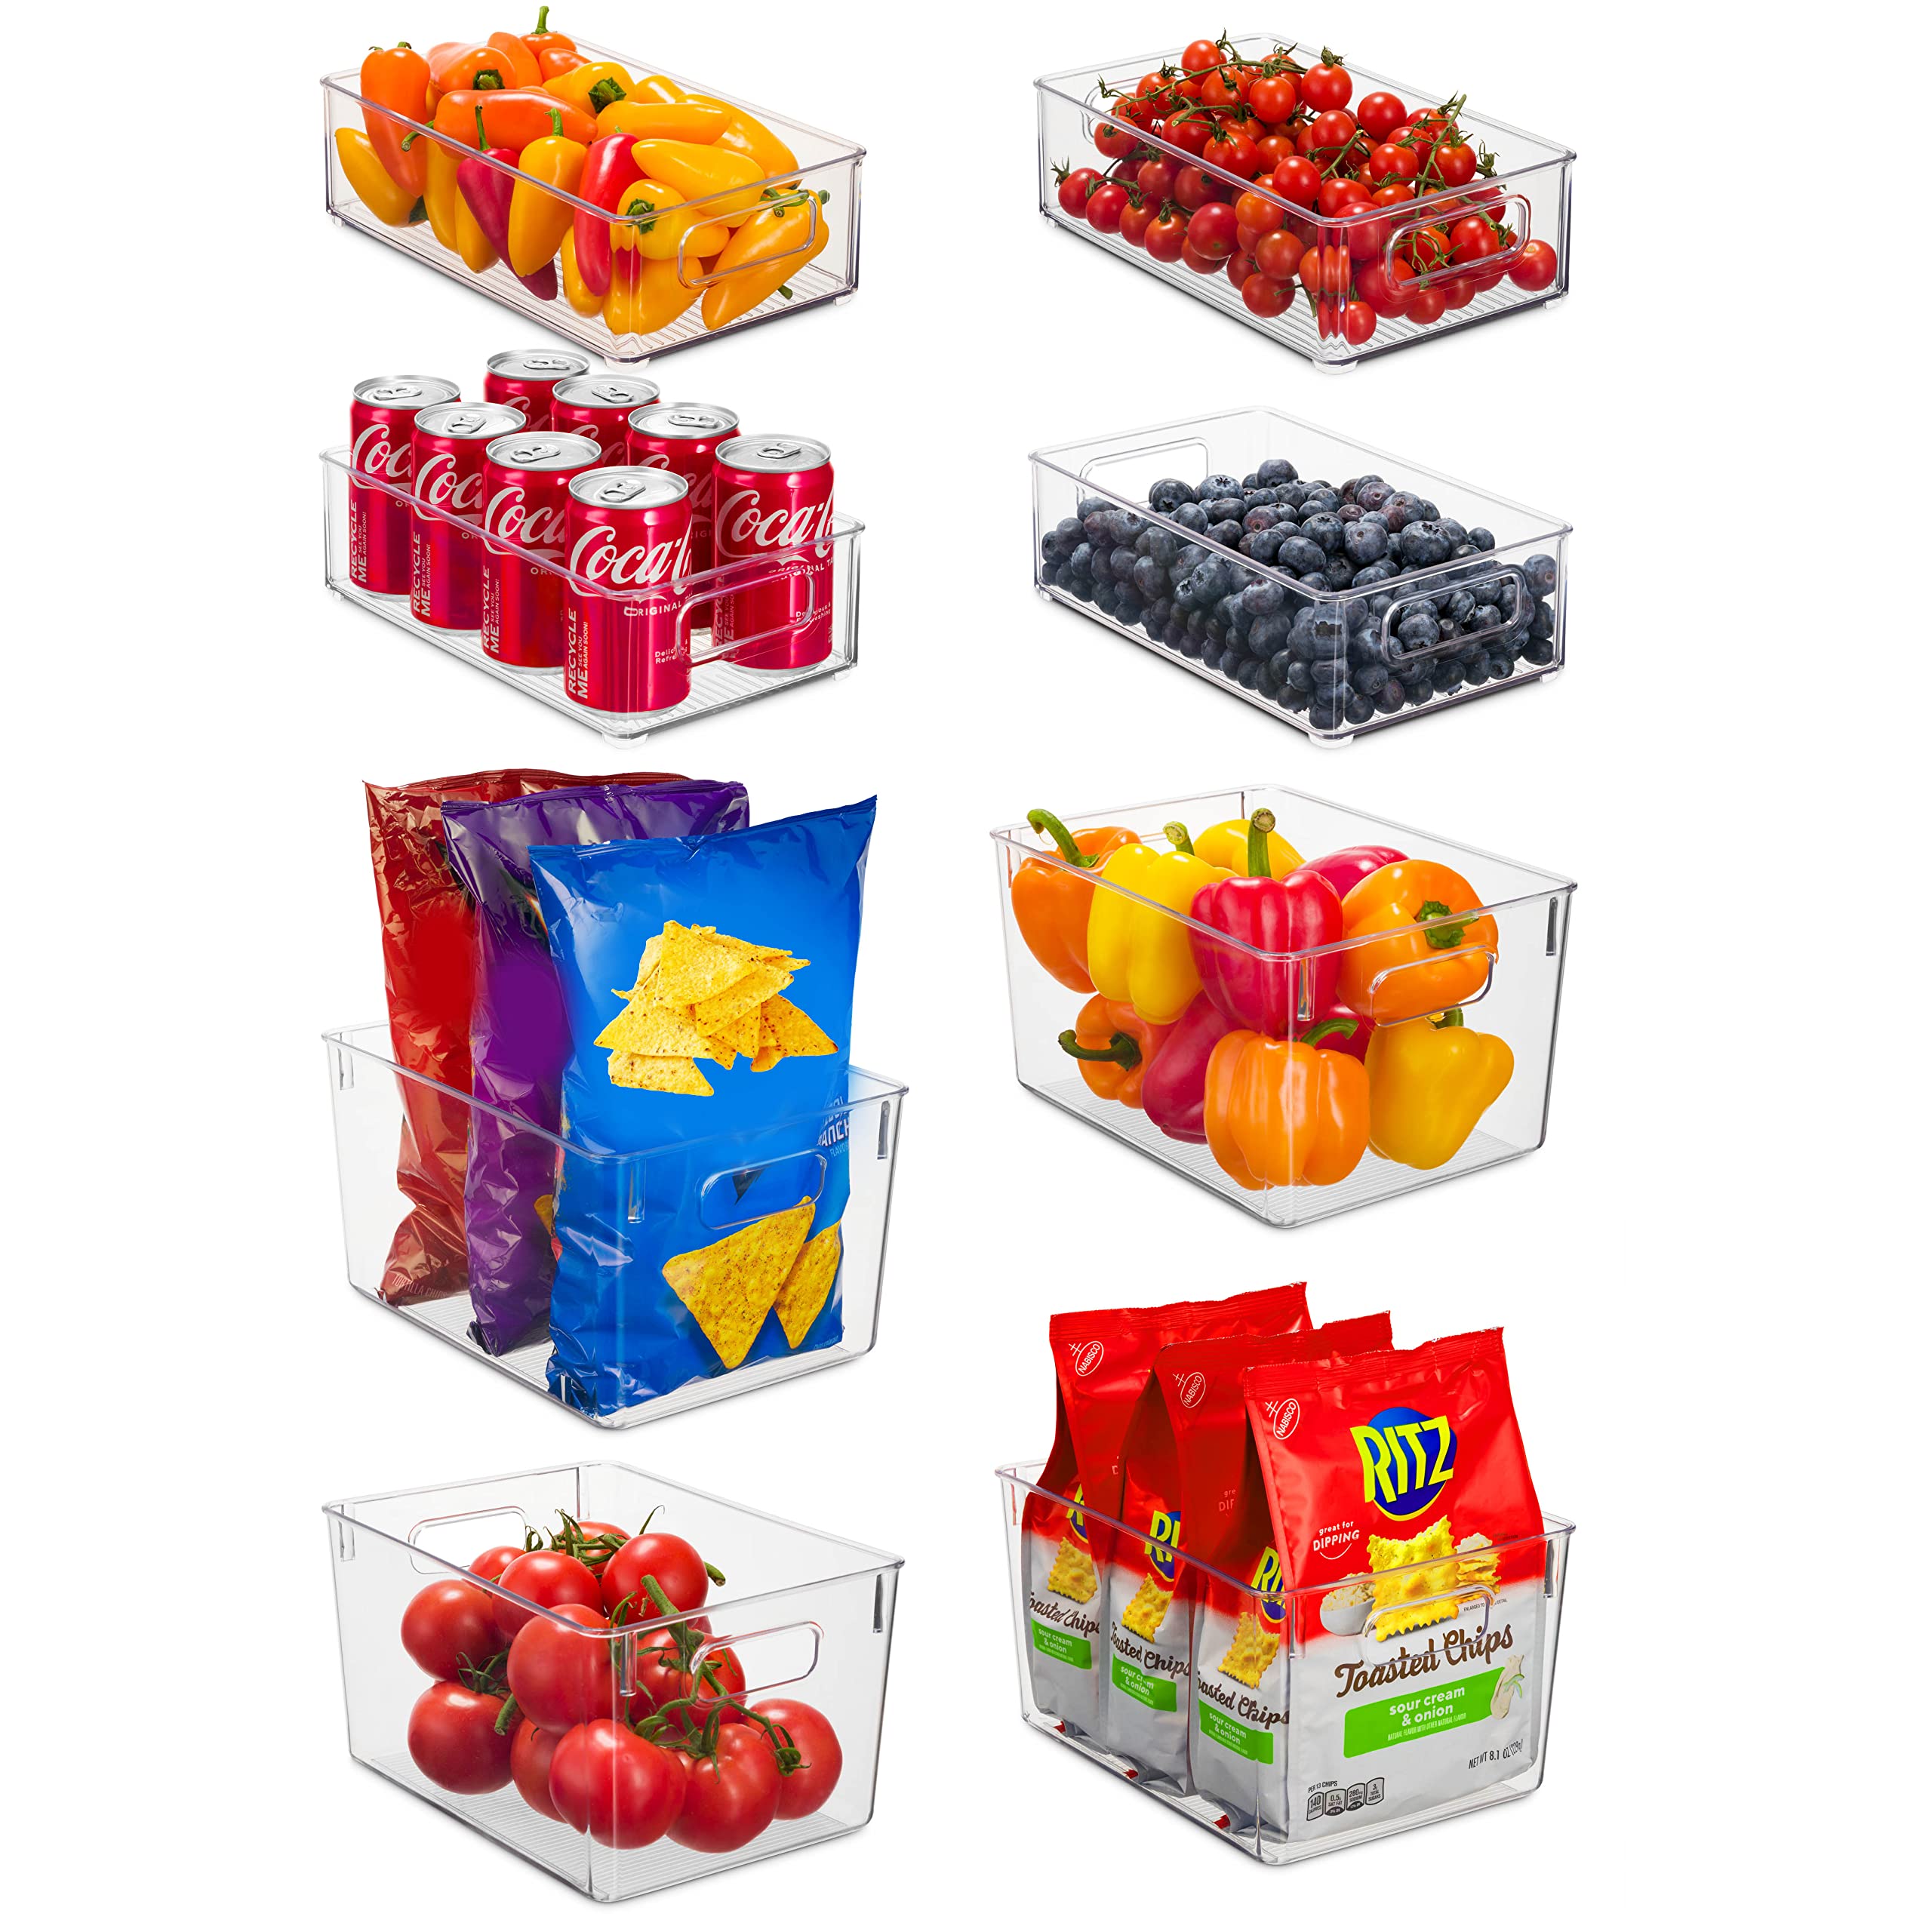 Set of 8 Refrigerator Pantry Organizer Bins $21.99 @ Amazon.com